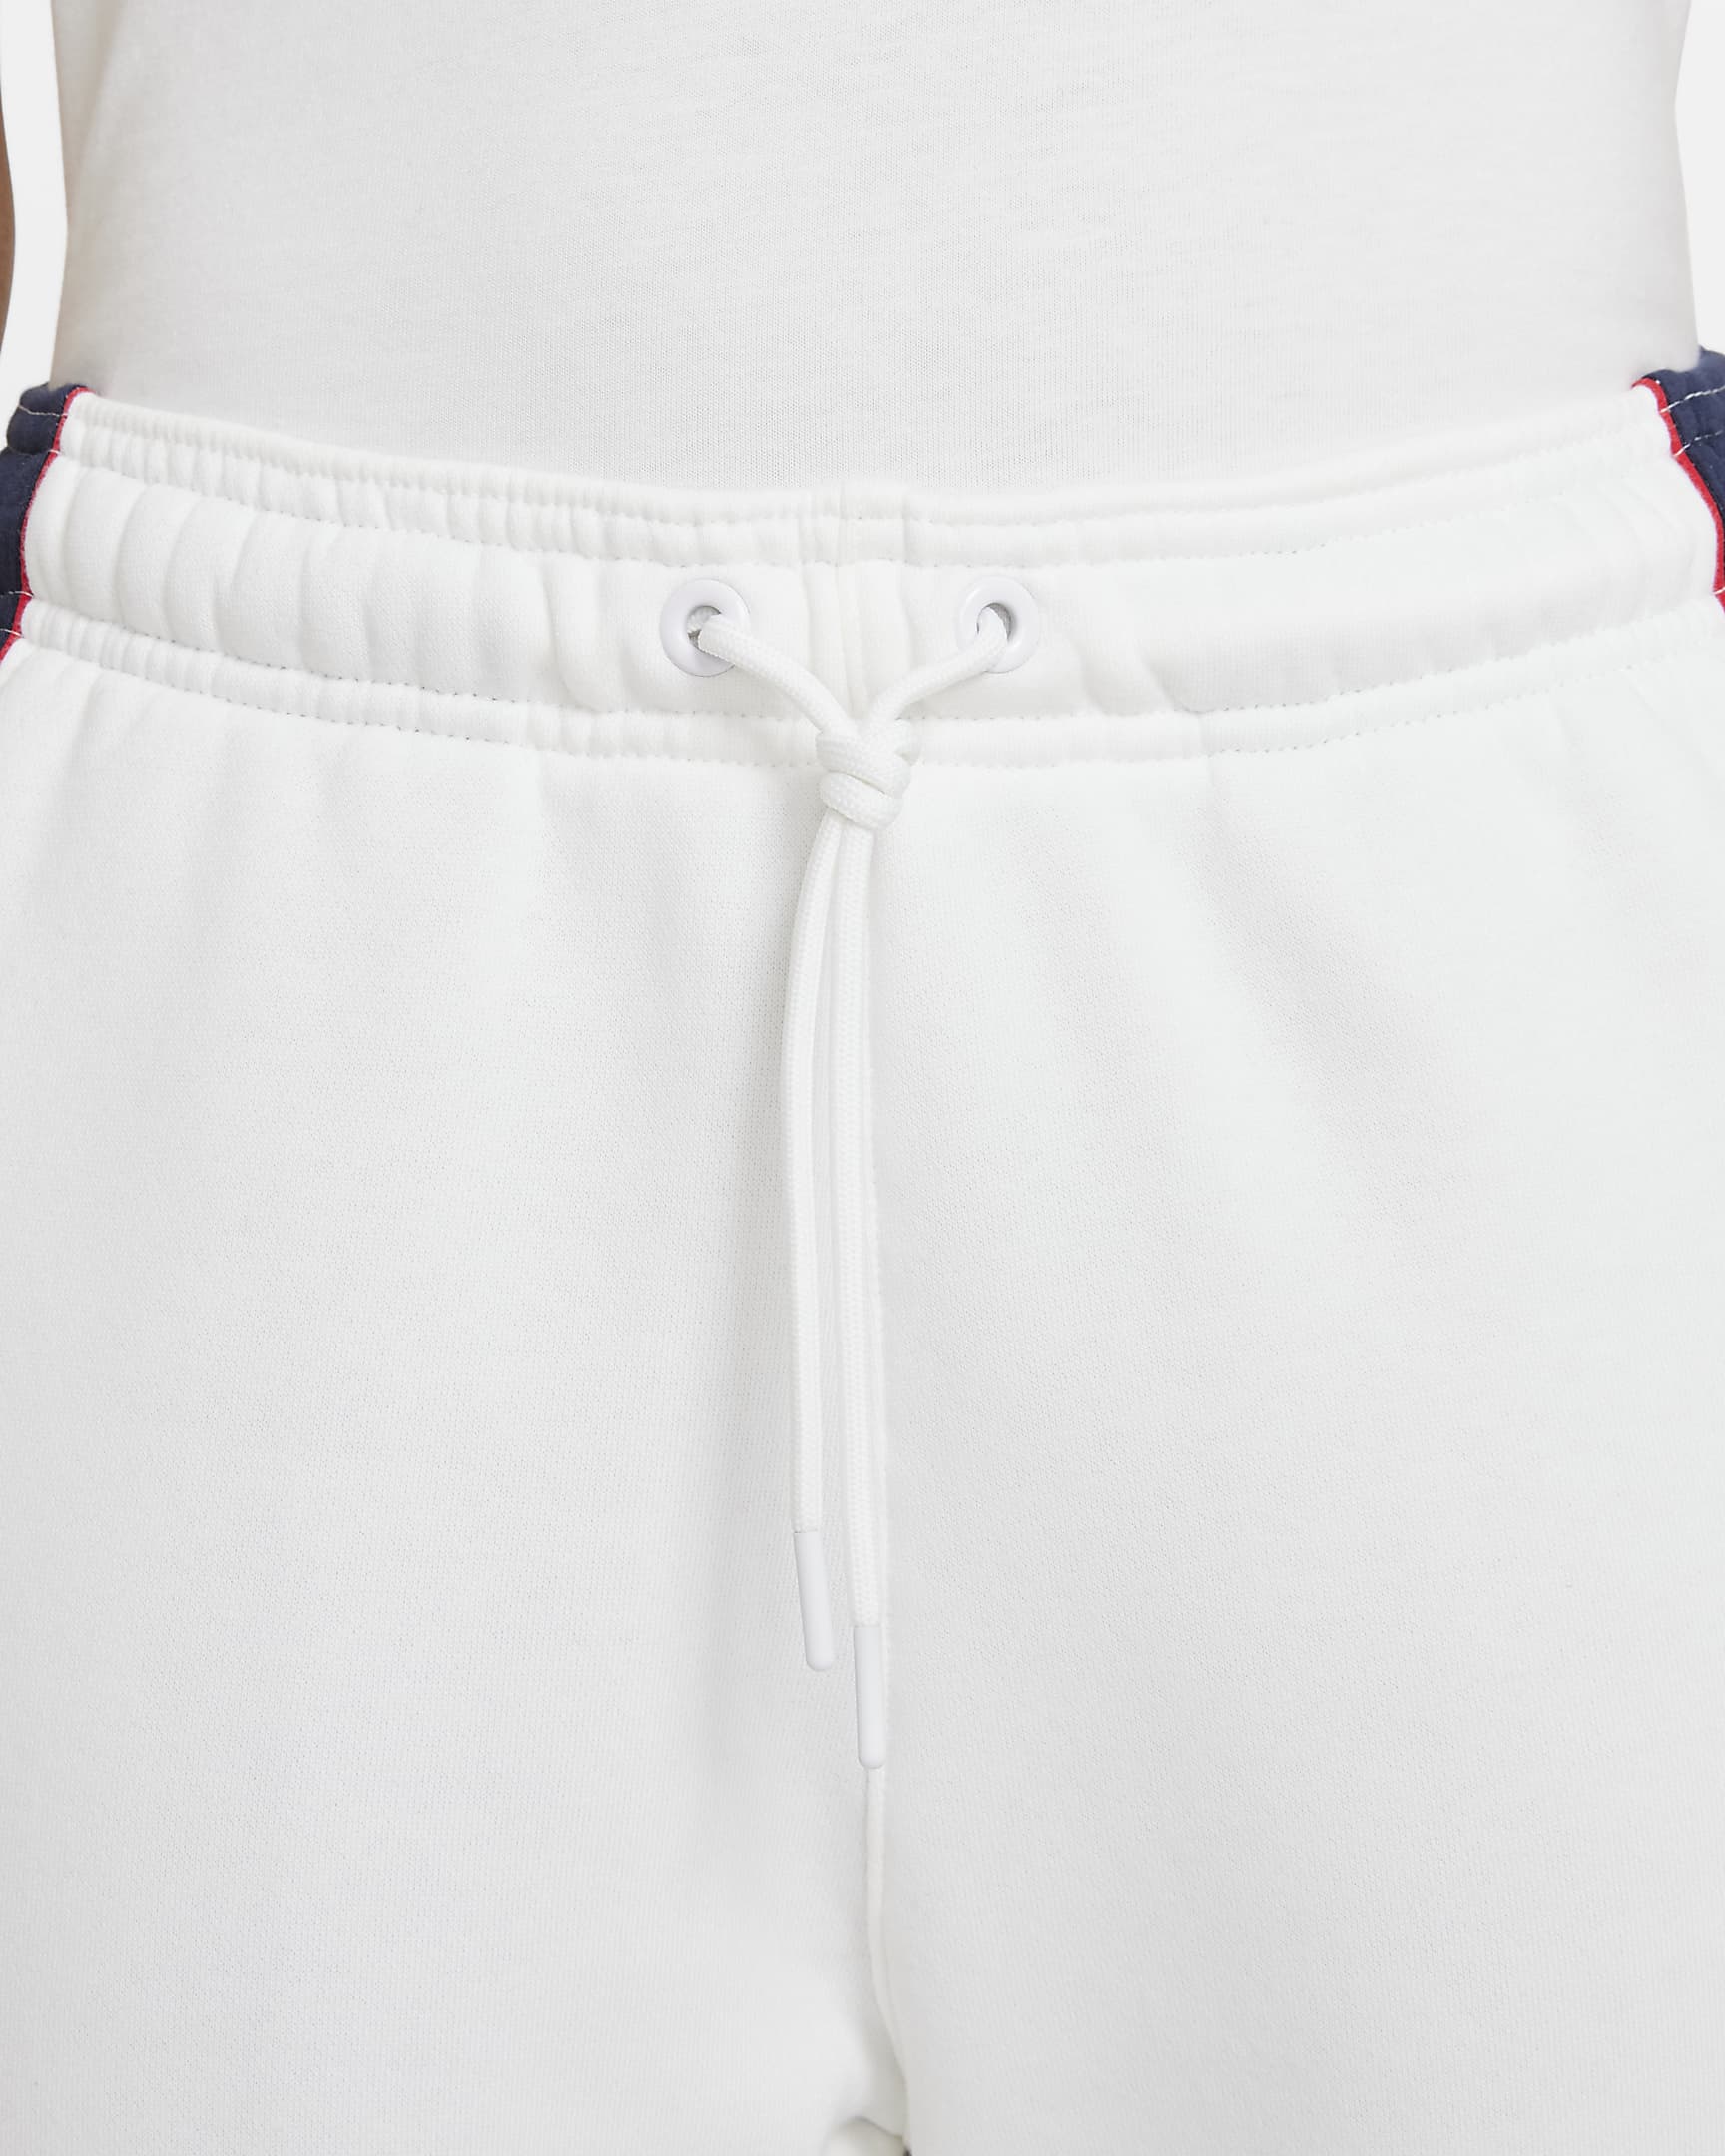 Paris Saint-Germain Women's Fleece Pants. Nike.com